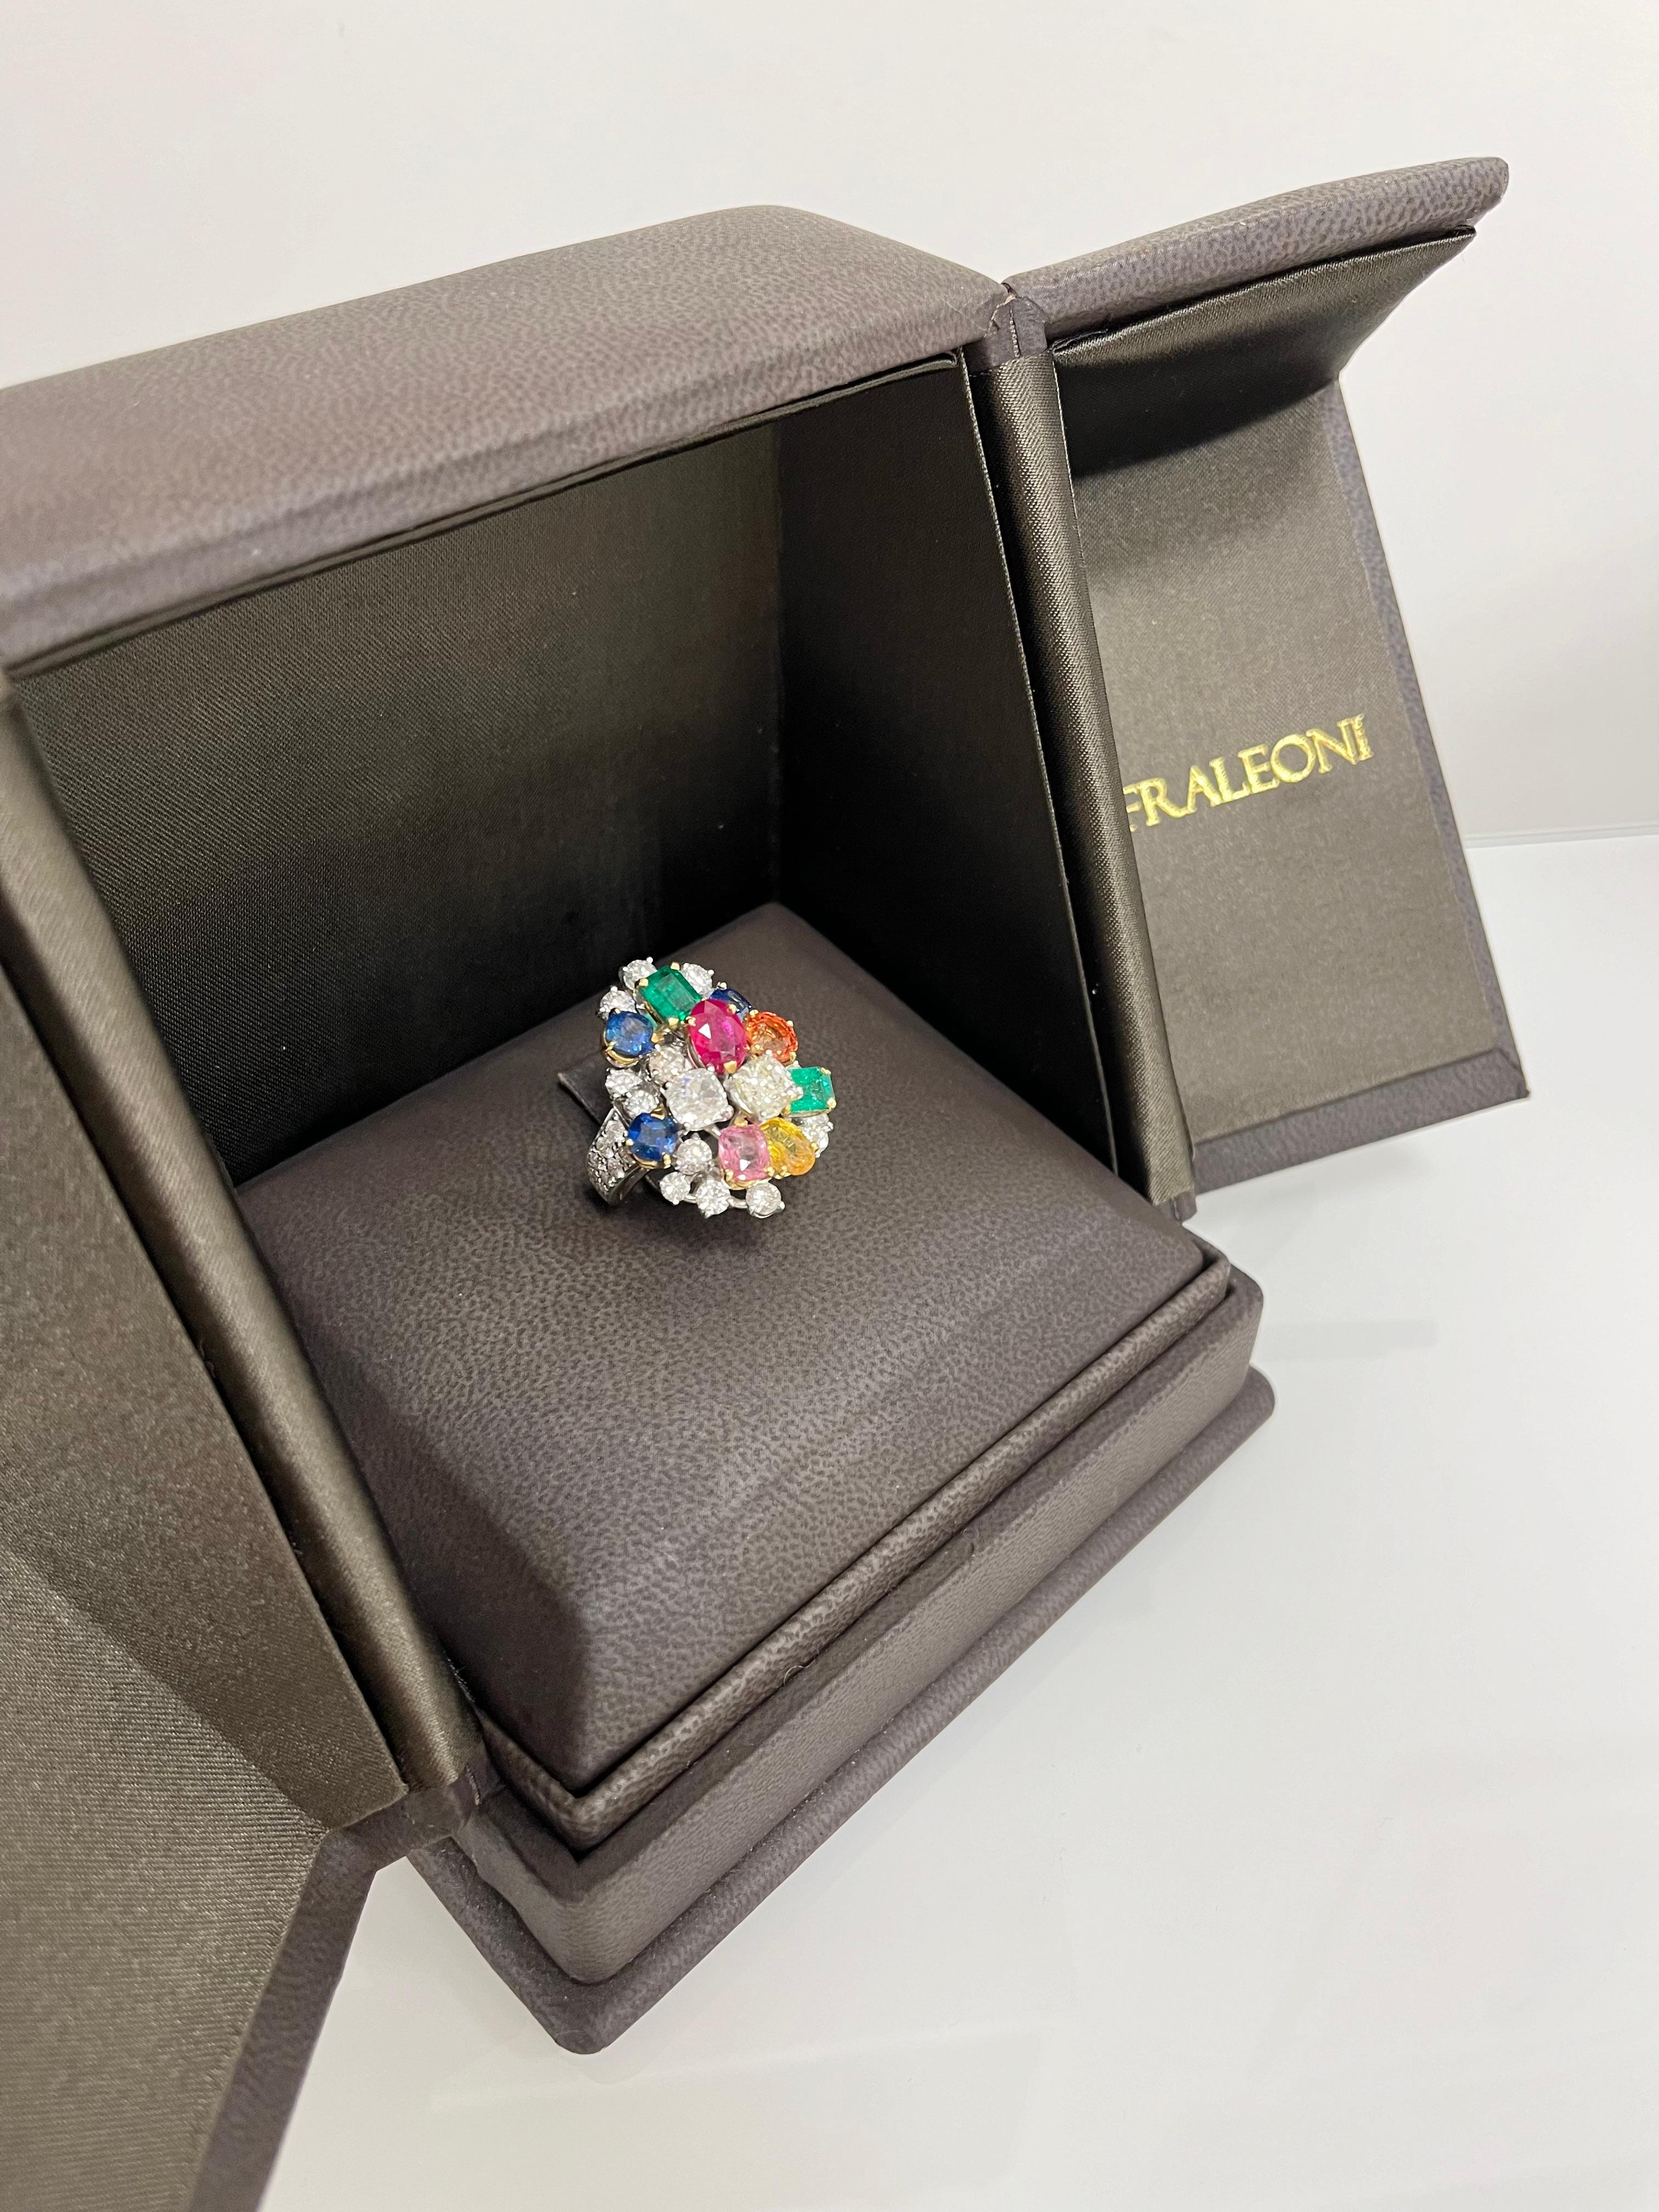 Modern Fraleoni 18 Kt. White Gold Diamond Ruby Emerald Sapphire Cocktail Ring For Sale